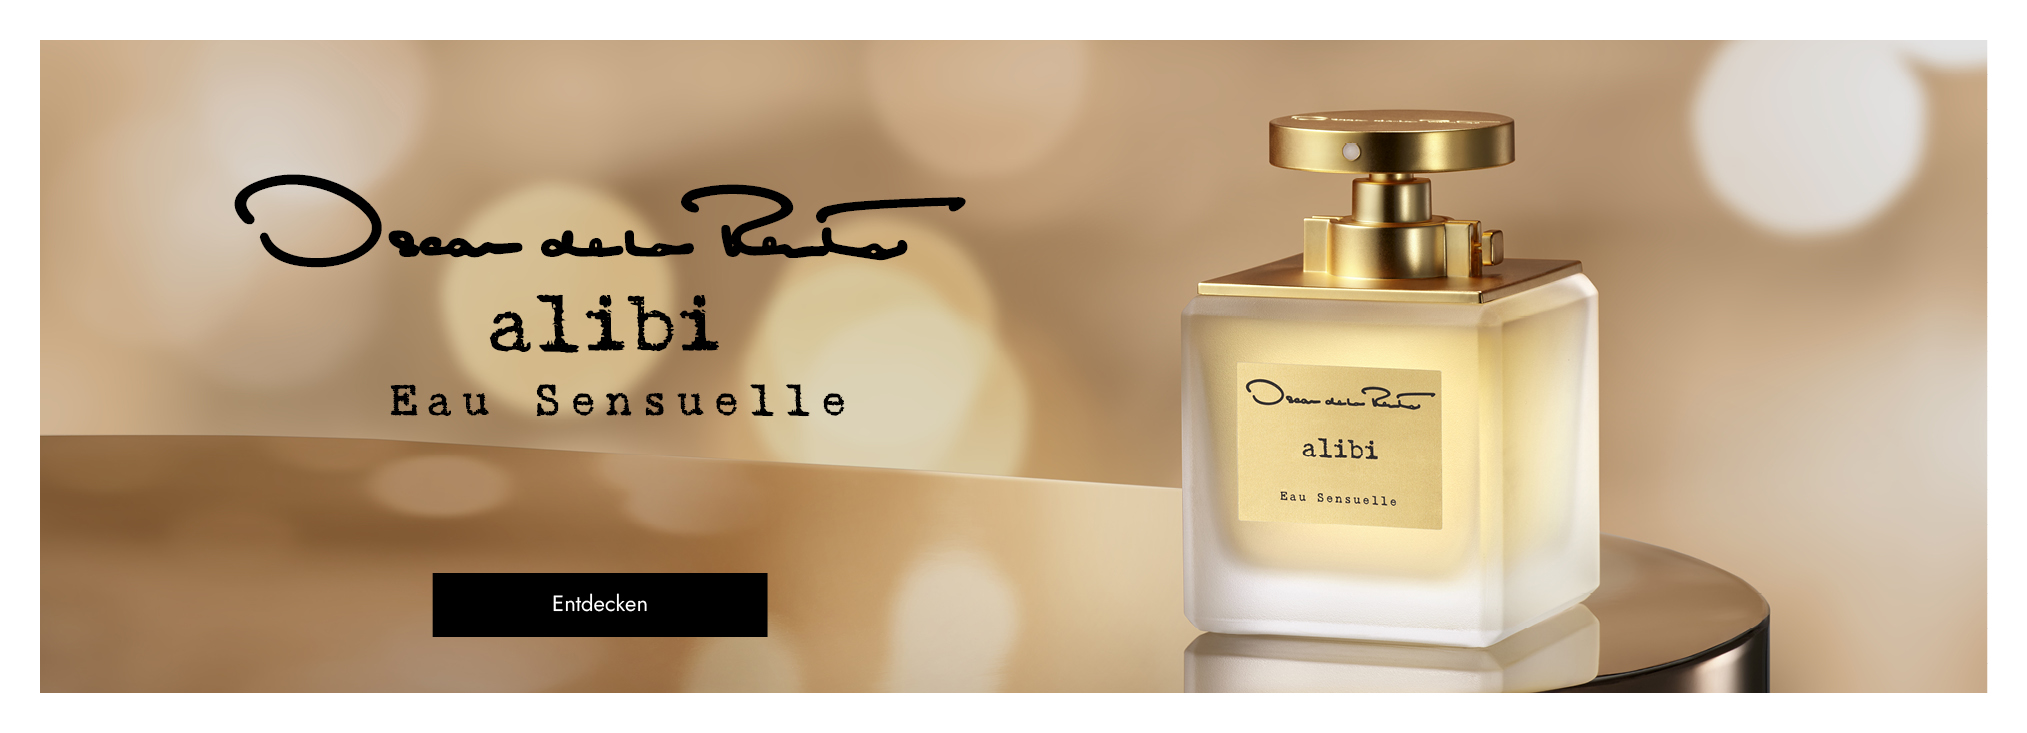 Oscar de la Renta_woman_fragrances